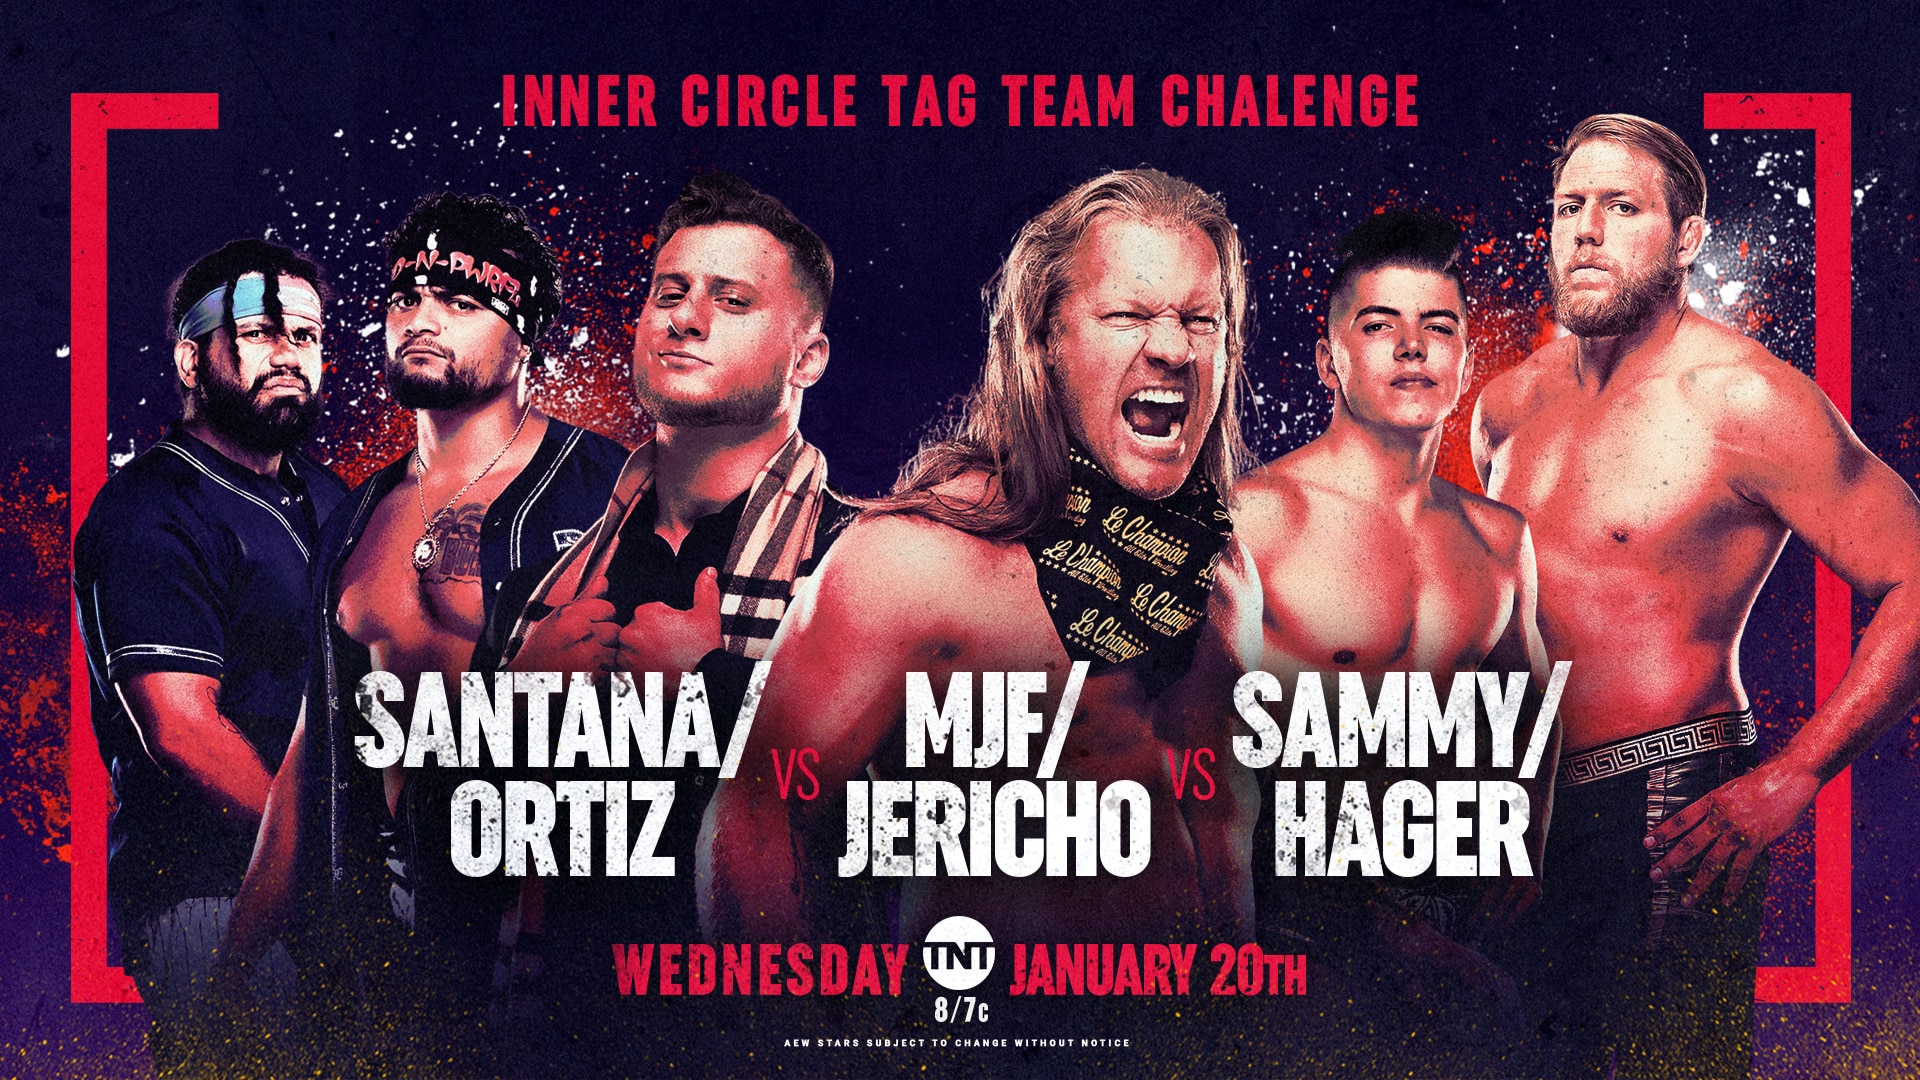  inner circle tag team challenge